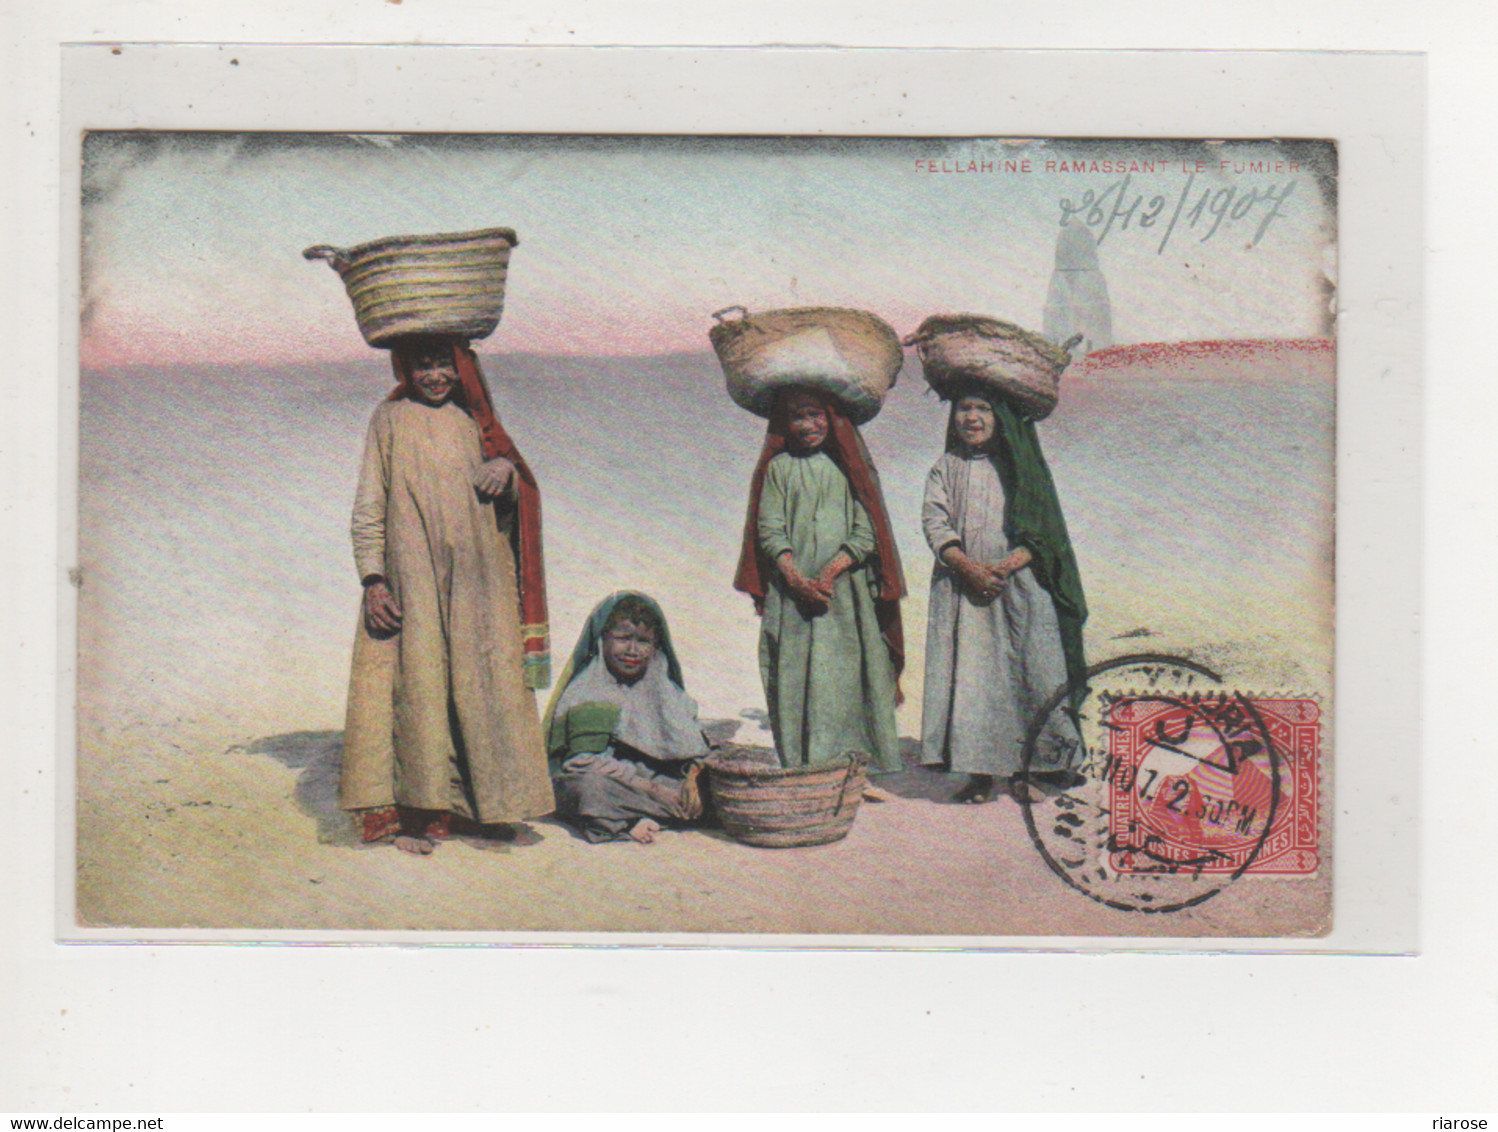 Antike Postkarte ÄGYPTEN FELLLAHINE RAMASSANT LE FUMIER - Disuq